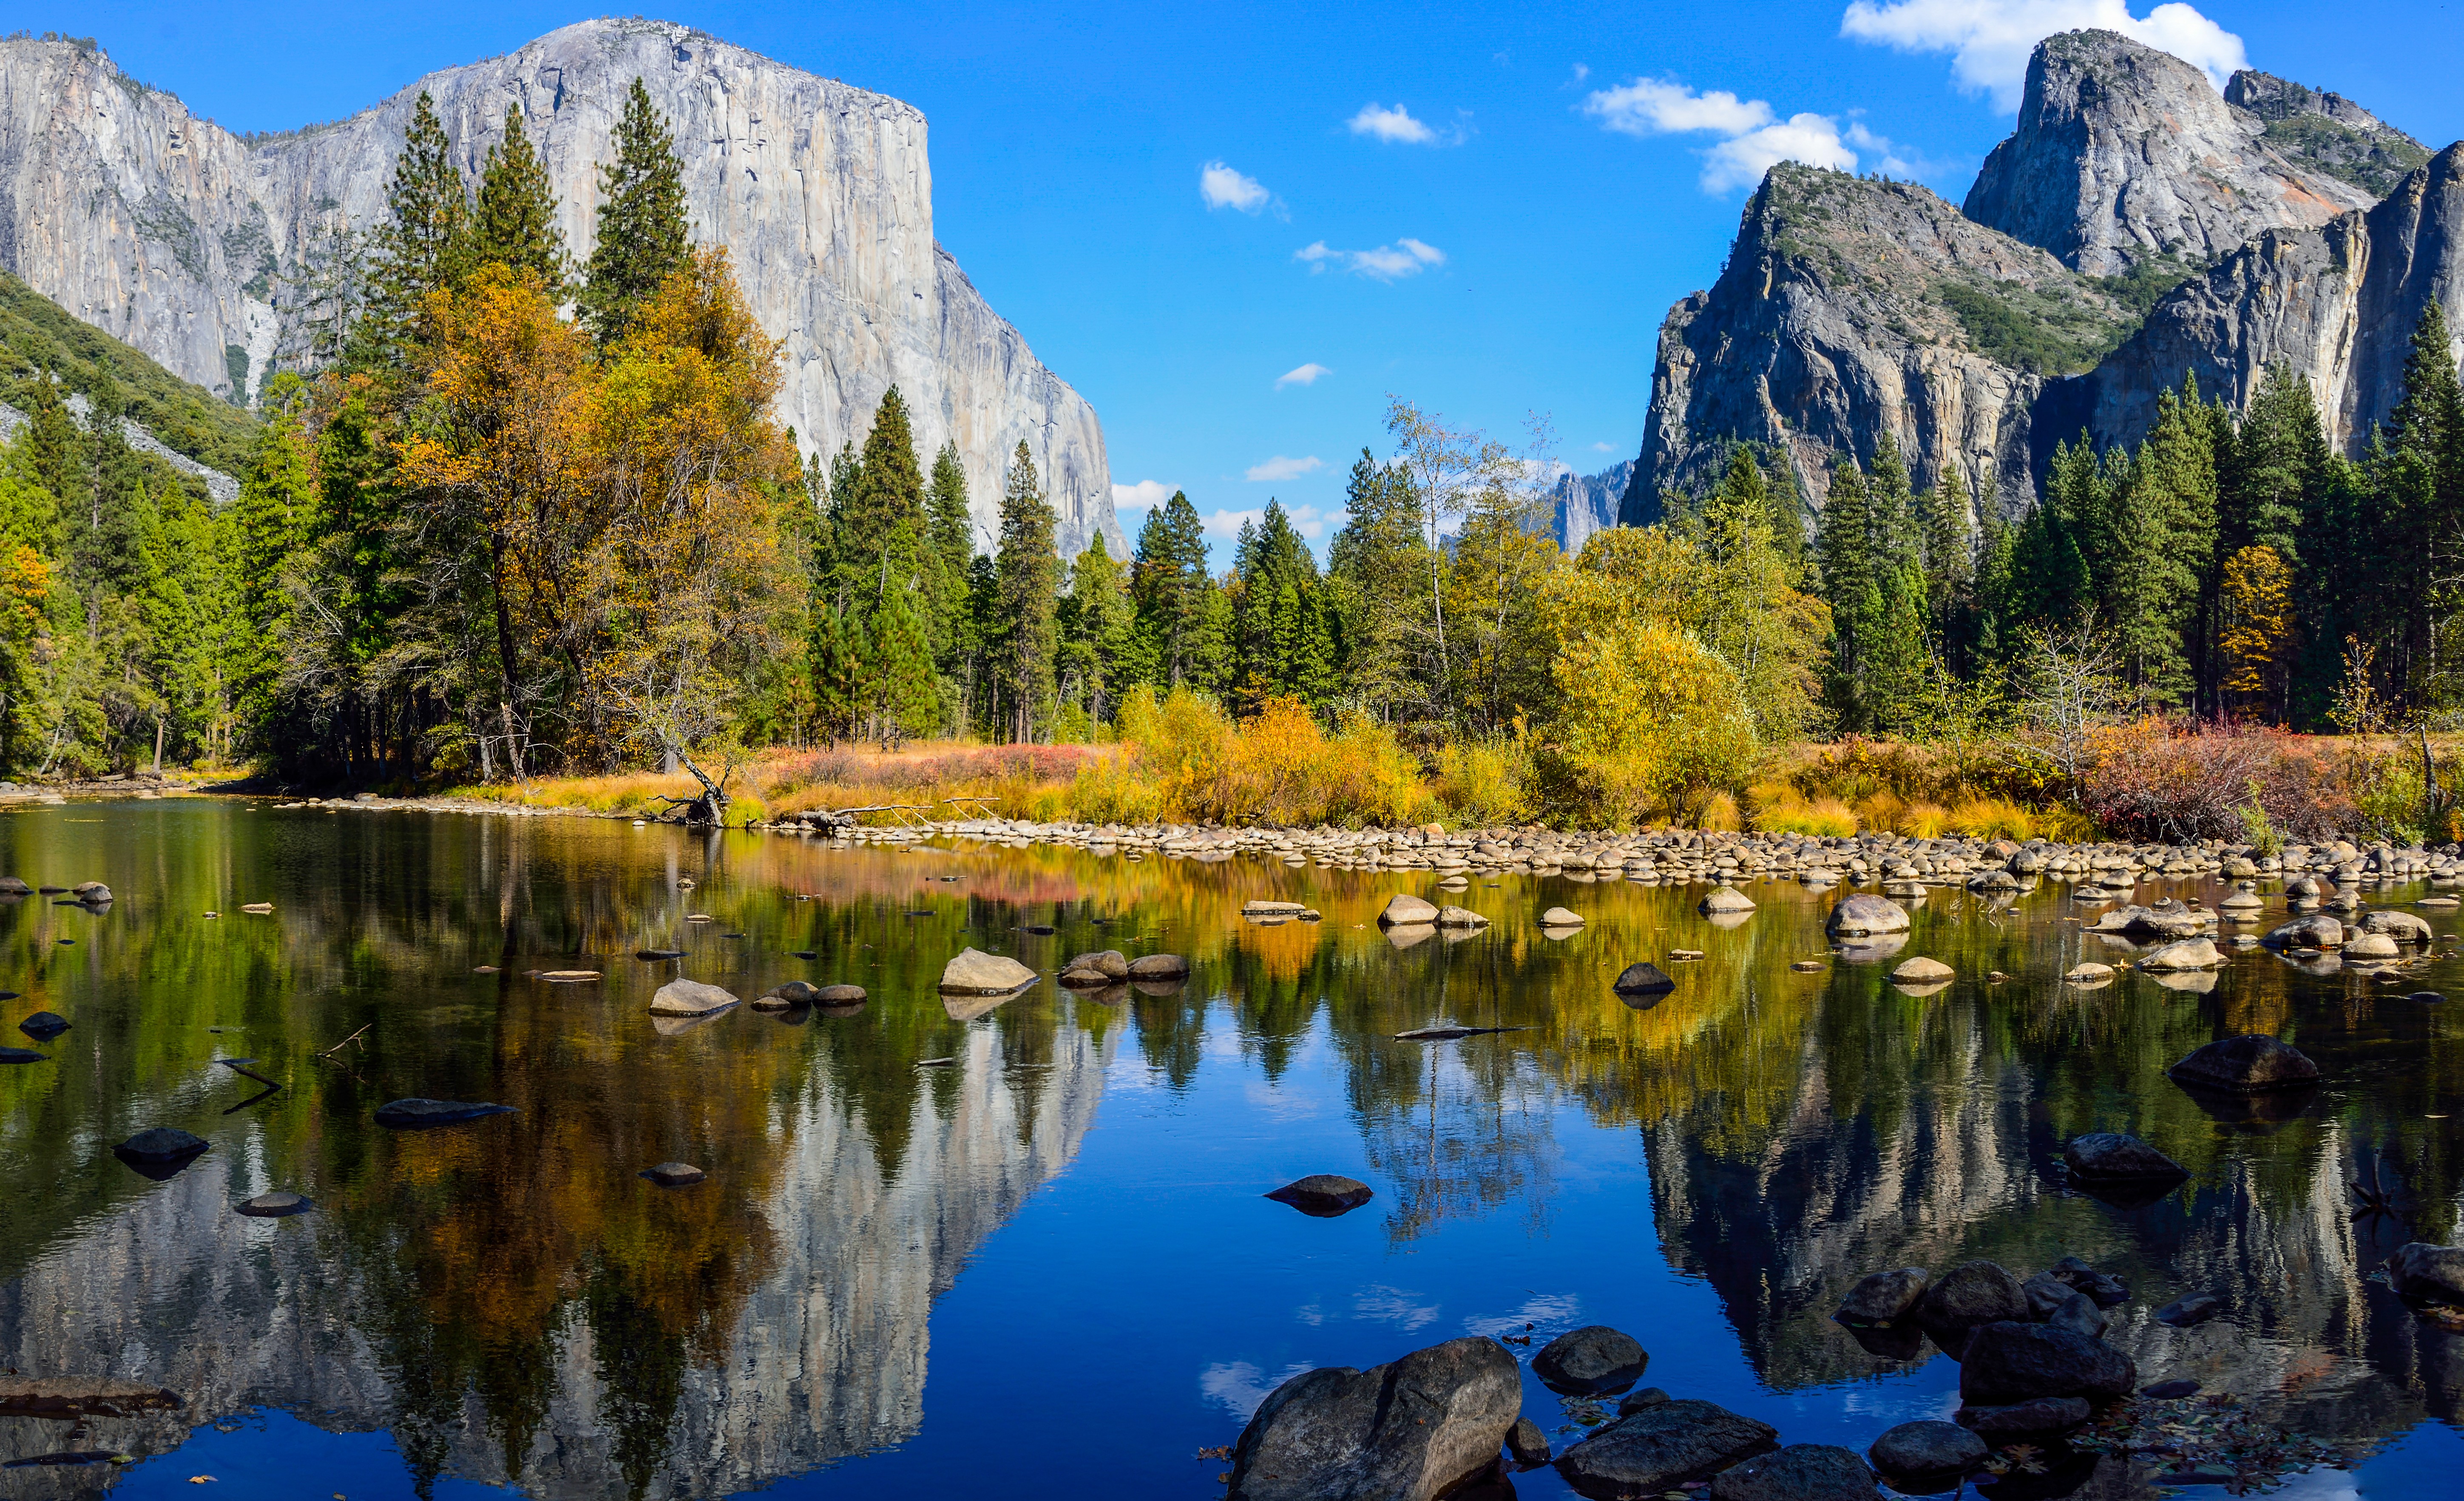 Yosemite National Park Backgrounds, Compatible - PC, Mobile, Gadgets| 5796x3531 px